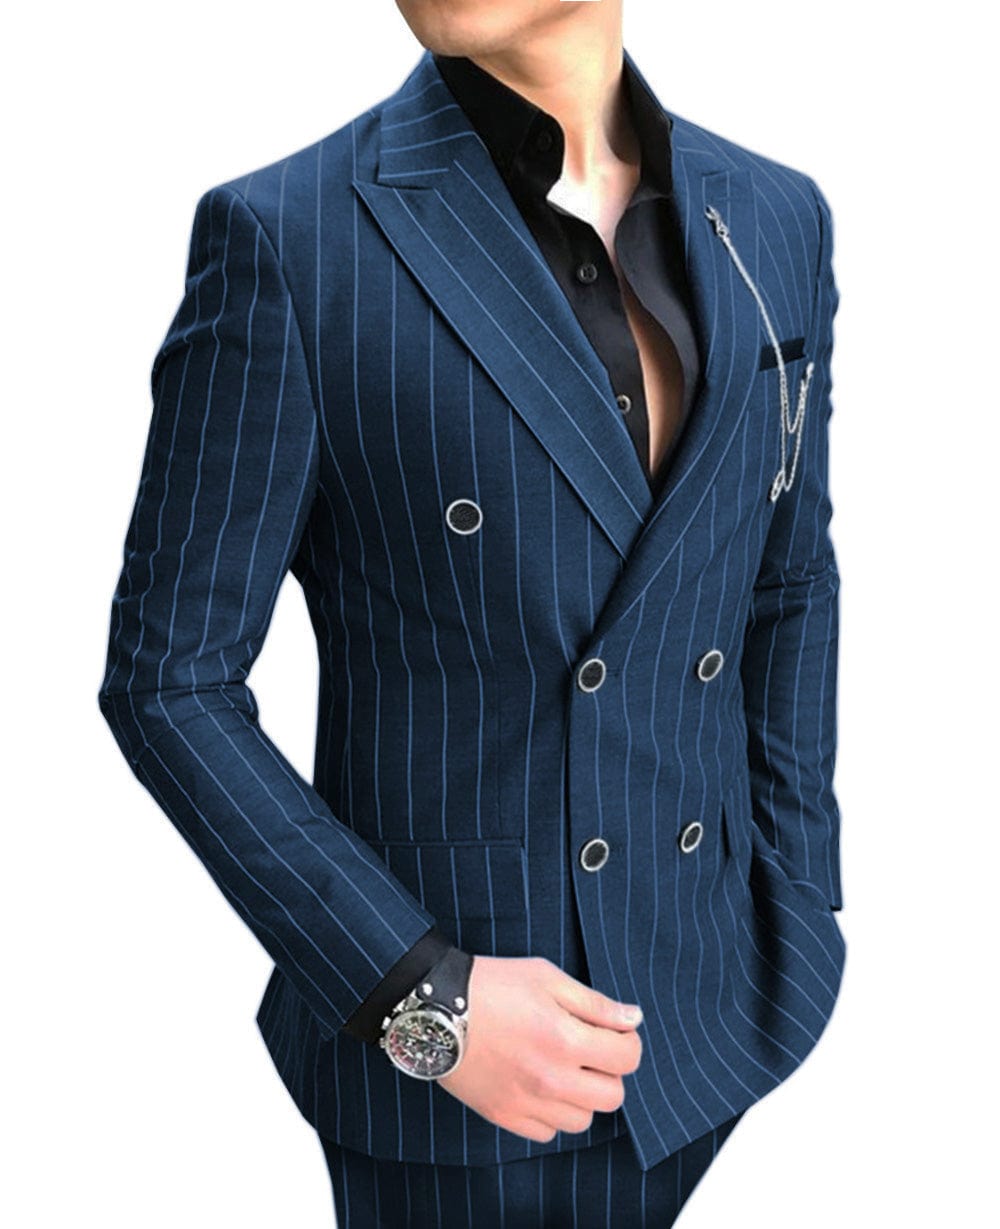 ceehuteey Formal Men's 2 Pieces Pinstripe Suit Peak Lapel Striped Tuxedos (Blazer+Pants)